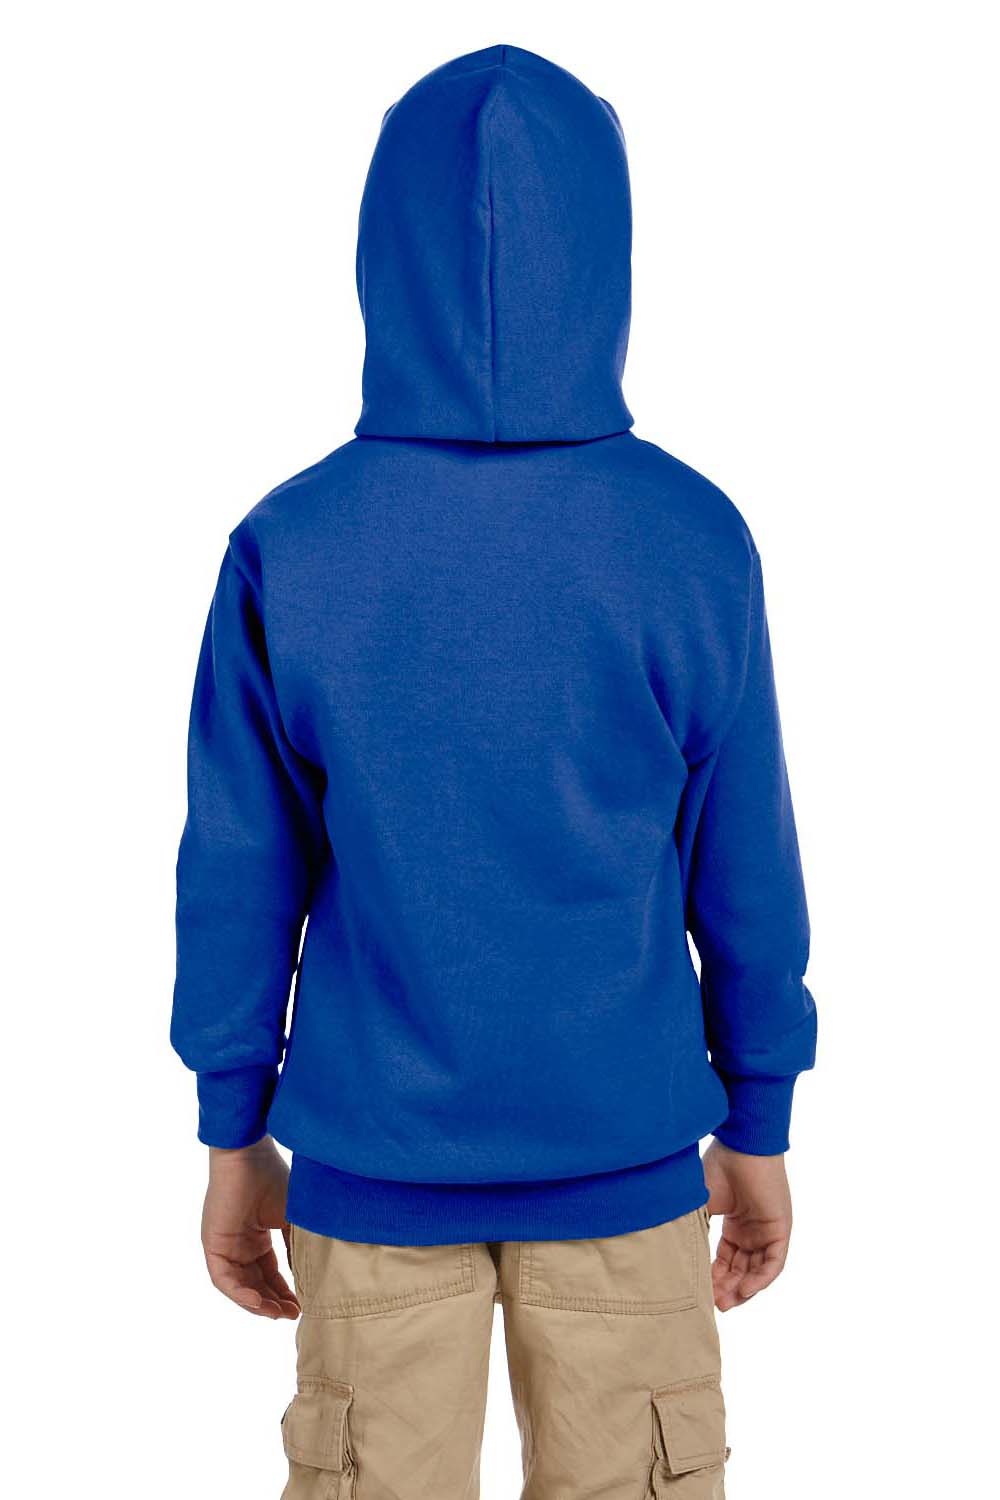 Hanes P473 Youth EcoSmart Print Pro XP Hooded Sweatshirt Hoodie Royal Blue Back